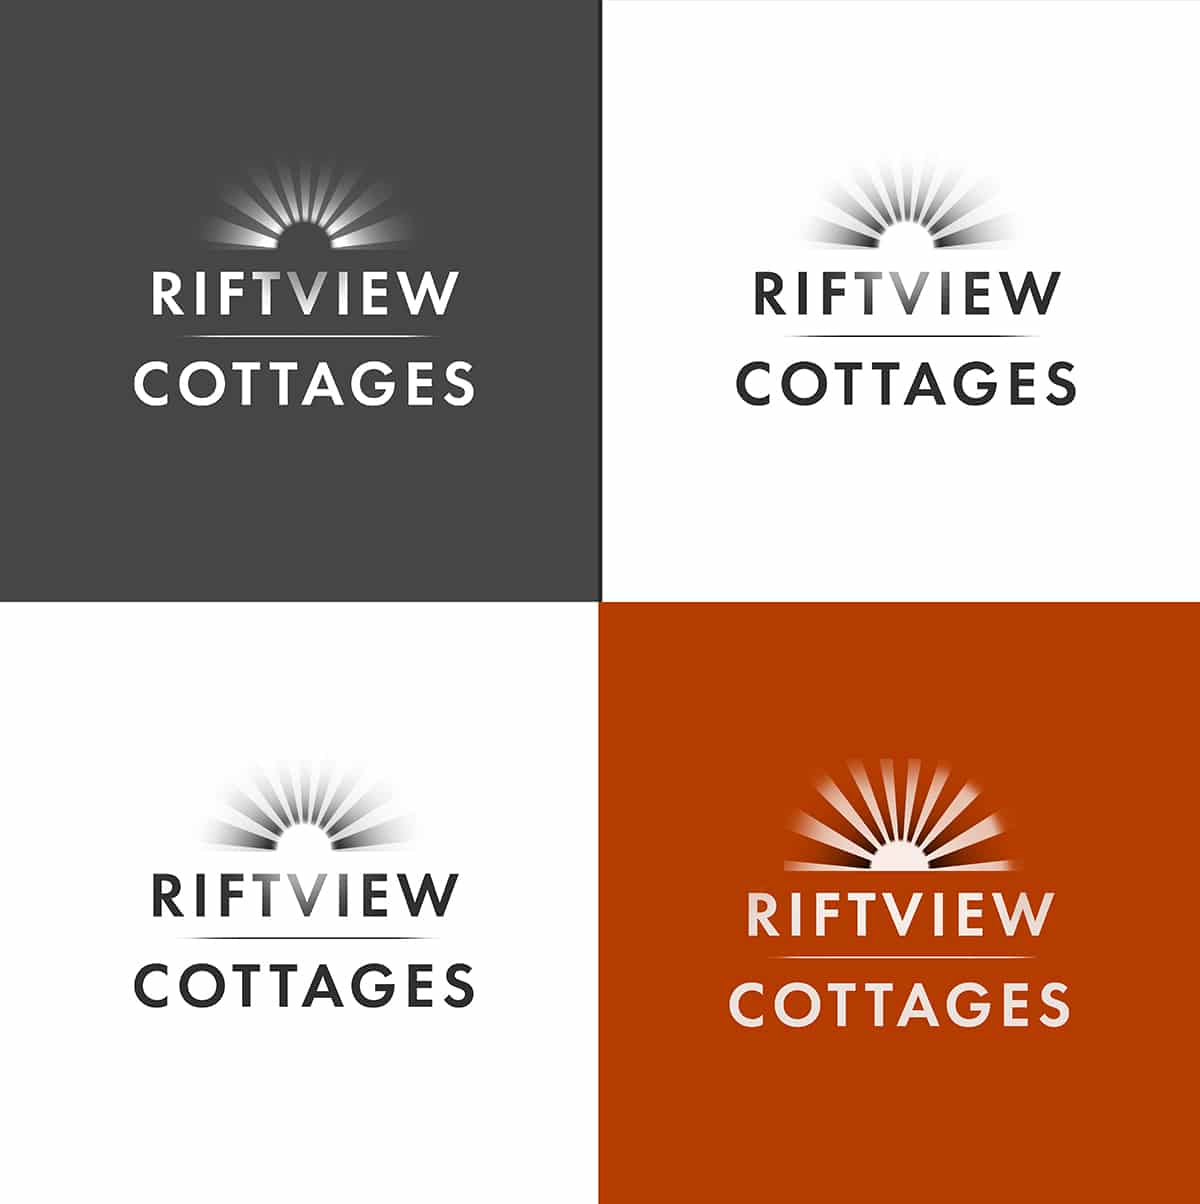 riftview cottage logo design